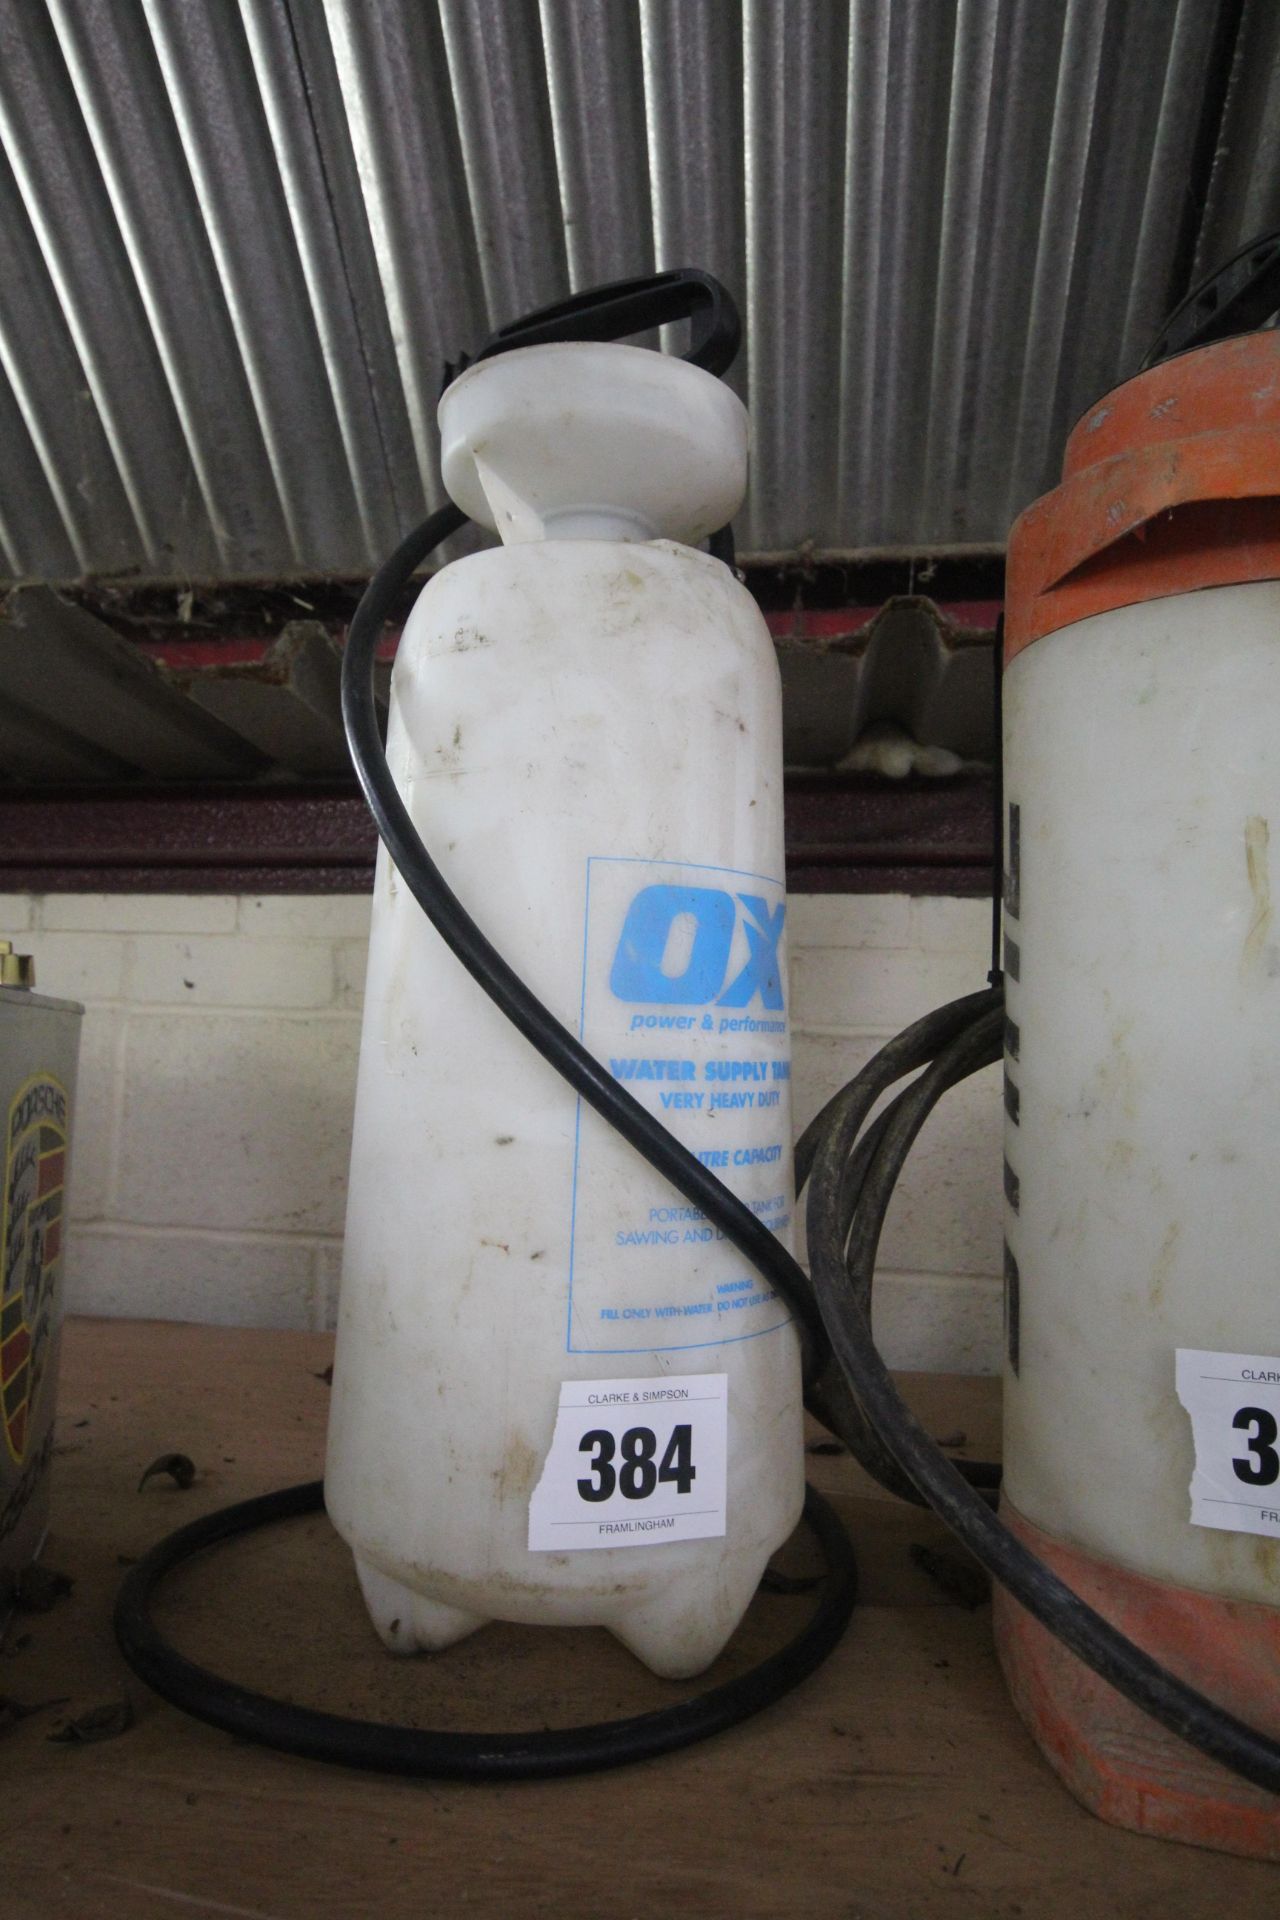 Dust suppression water bottle. For sale on behalf of the Directors, pending liquidation. V